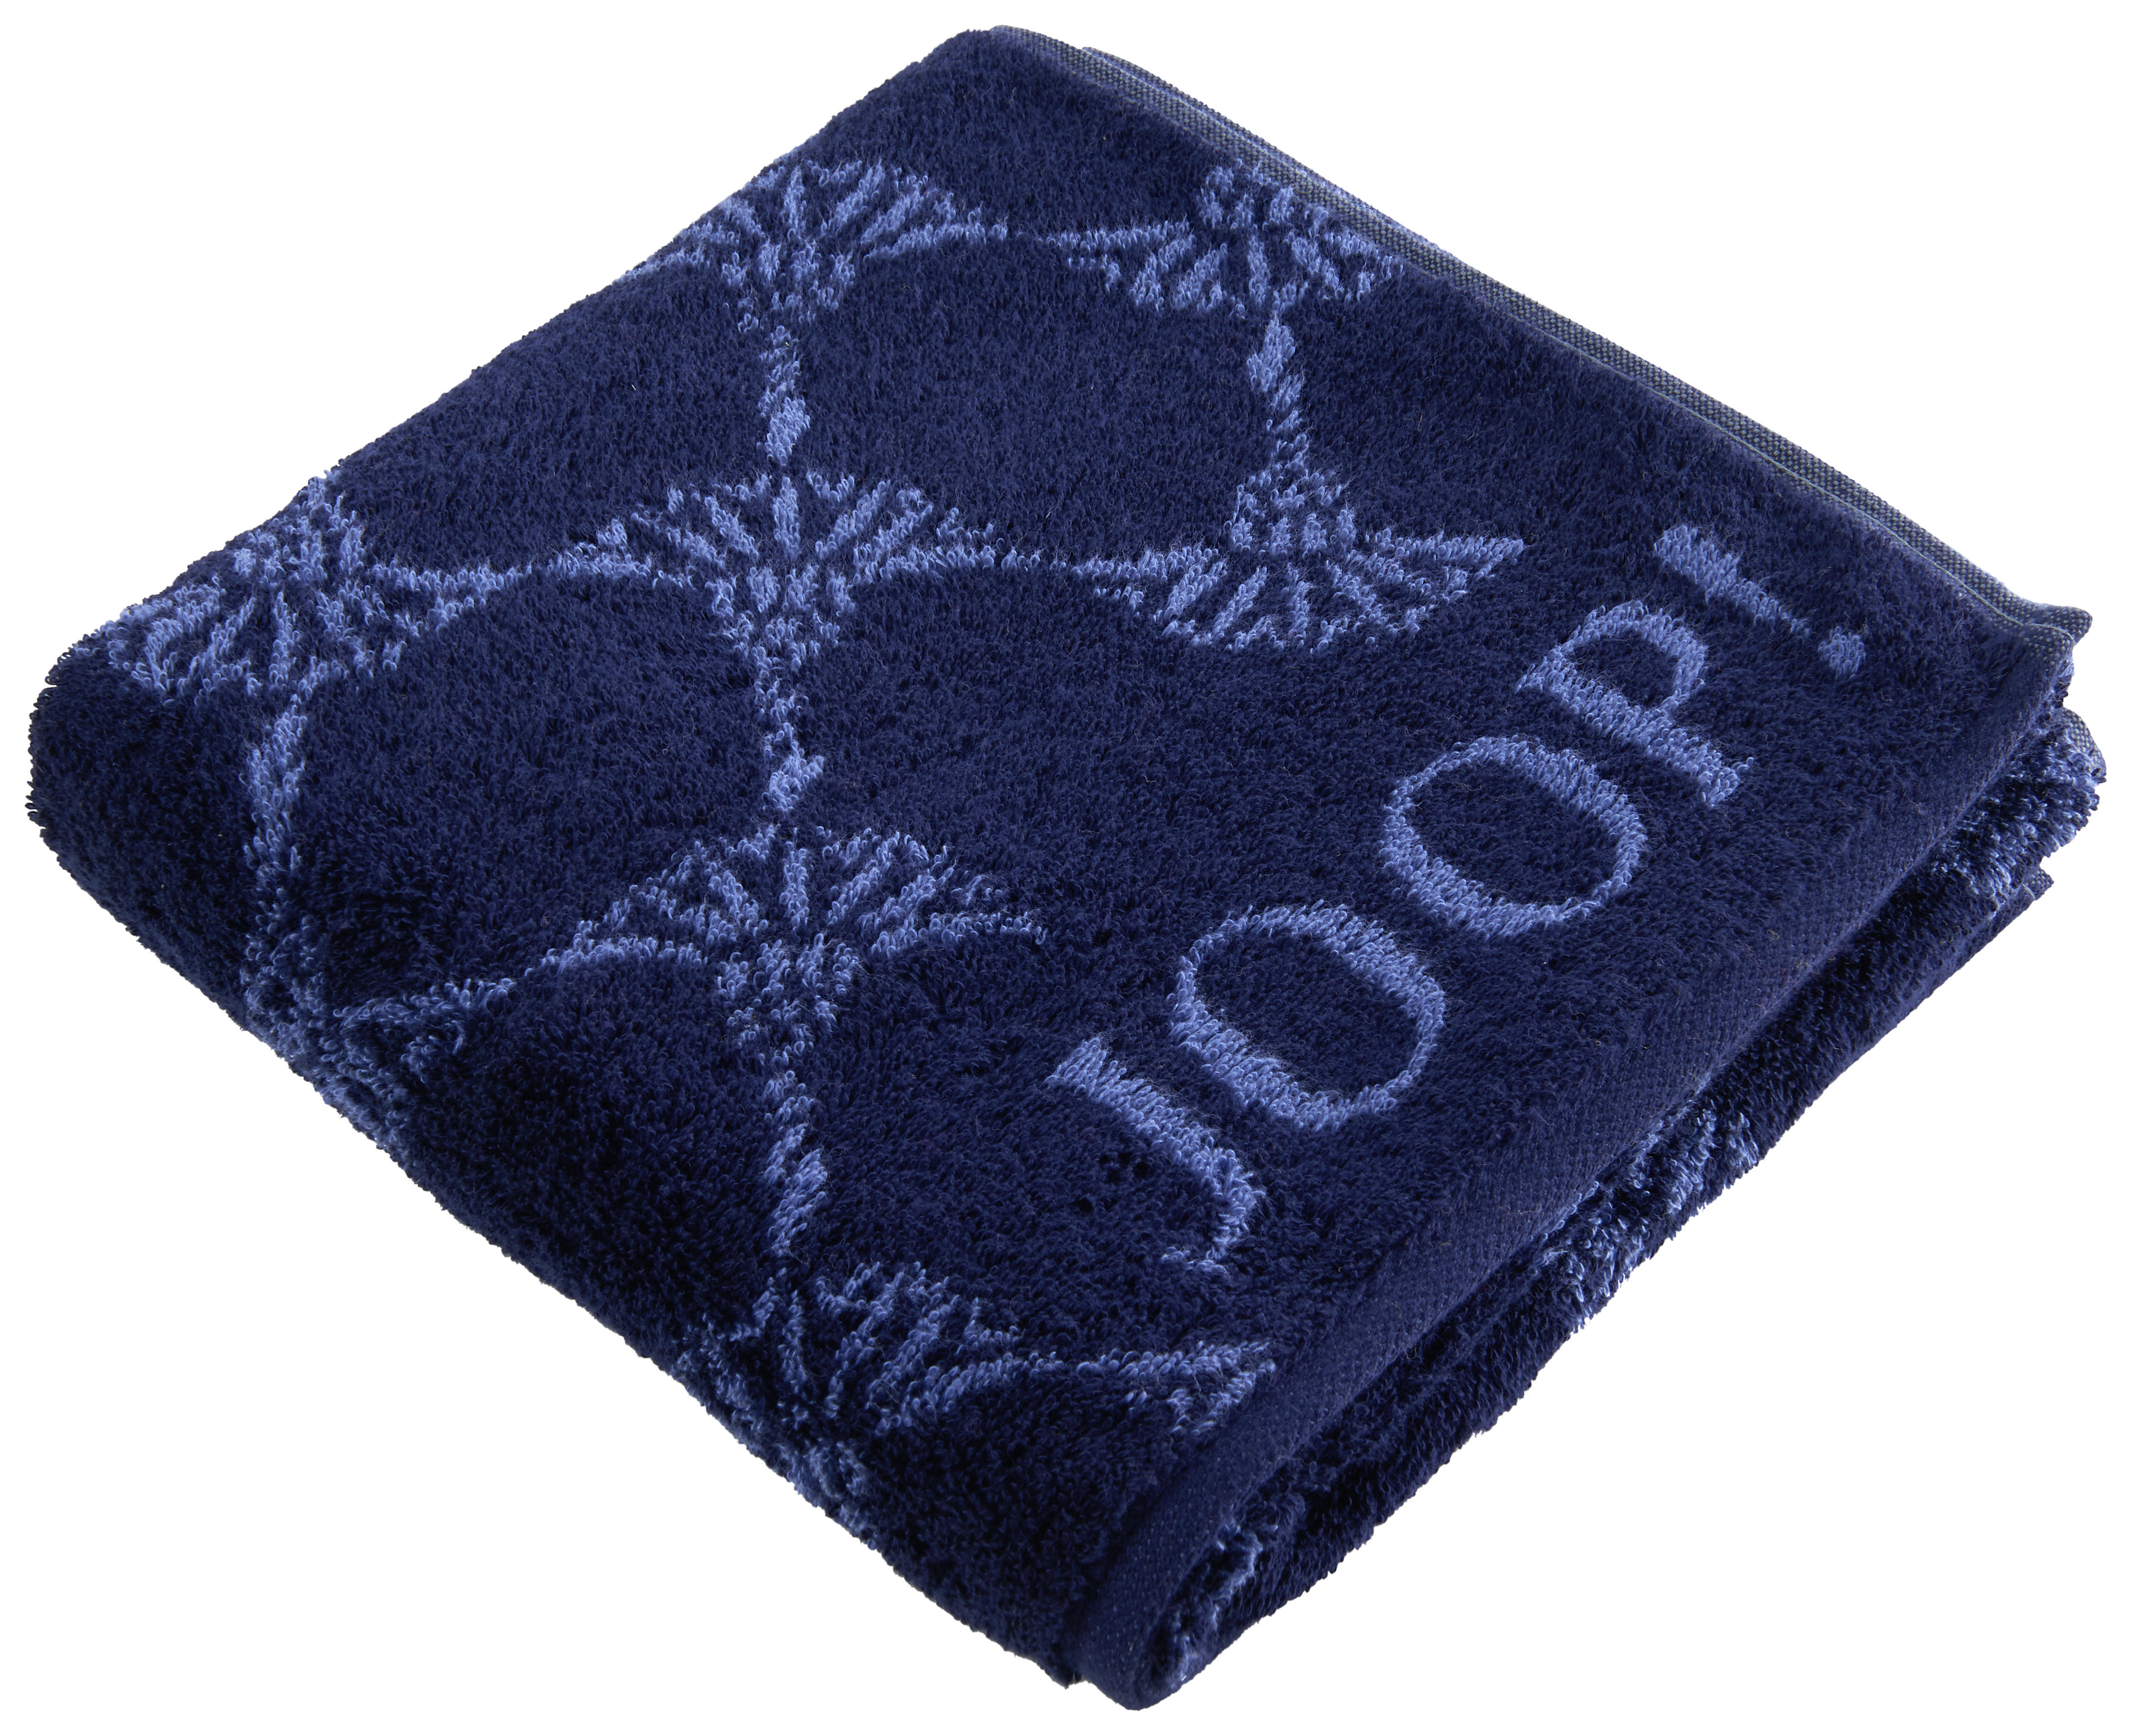 HANDTUCH Classic Cornflower  - Blau/Dunkelblau, Design, Textil (50/100cm) - Joop!